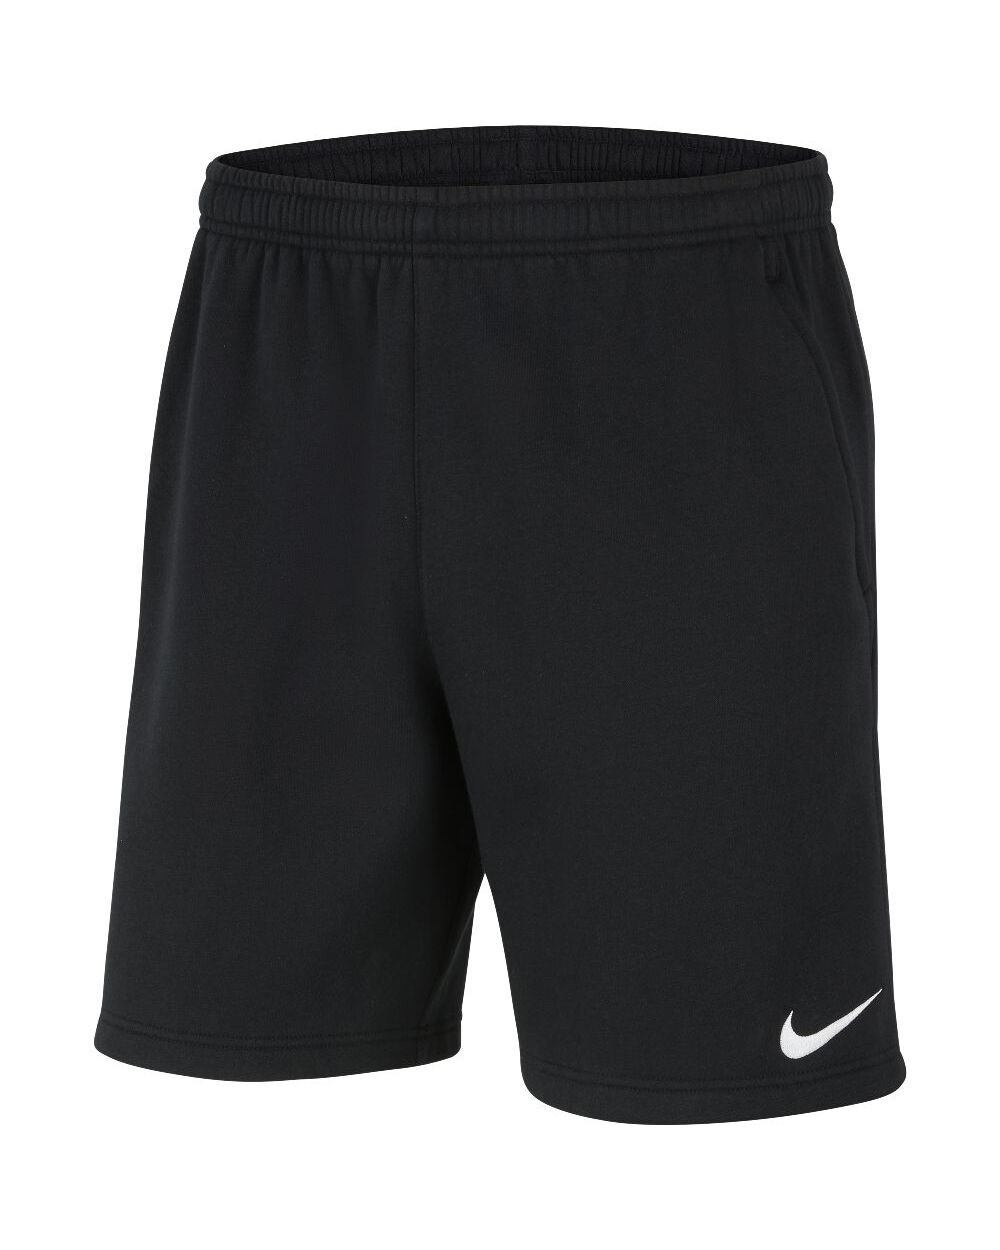 Pantalón corto para salida Nike Team Club 20 Negro para Hombre - CW6910-010